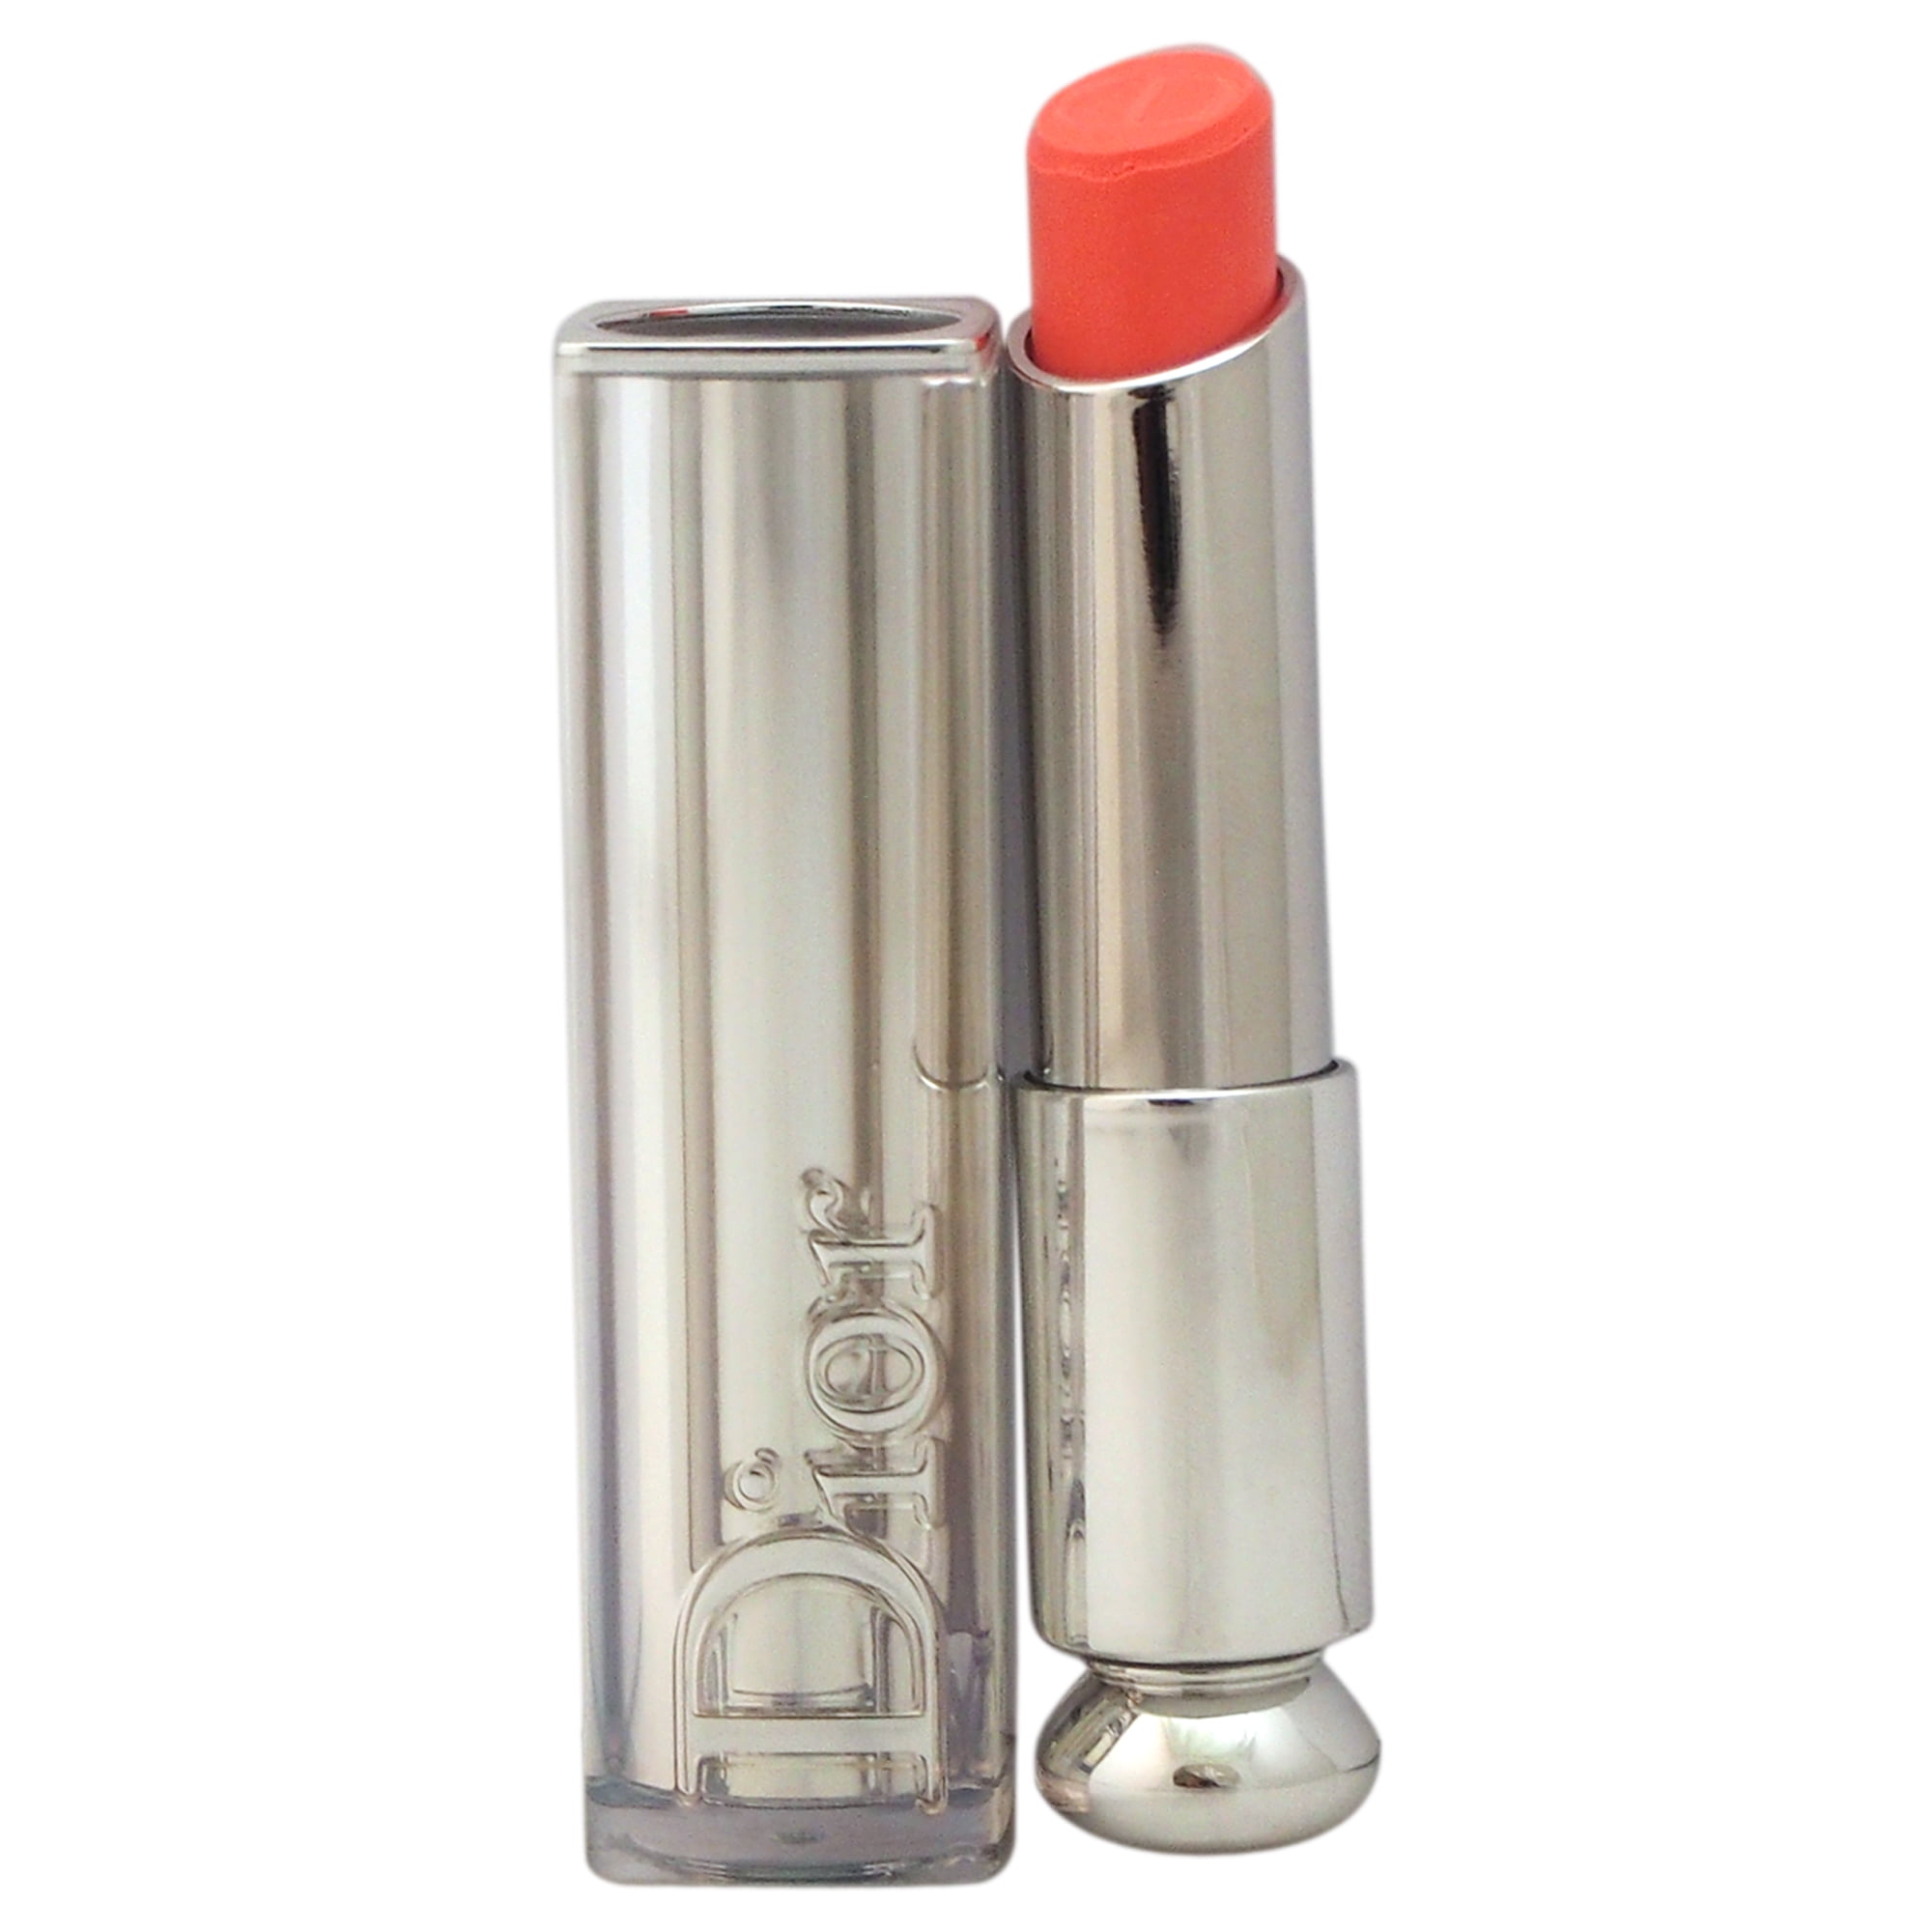 dior addict lipstick 441